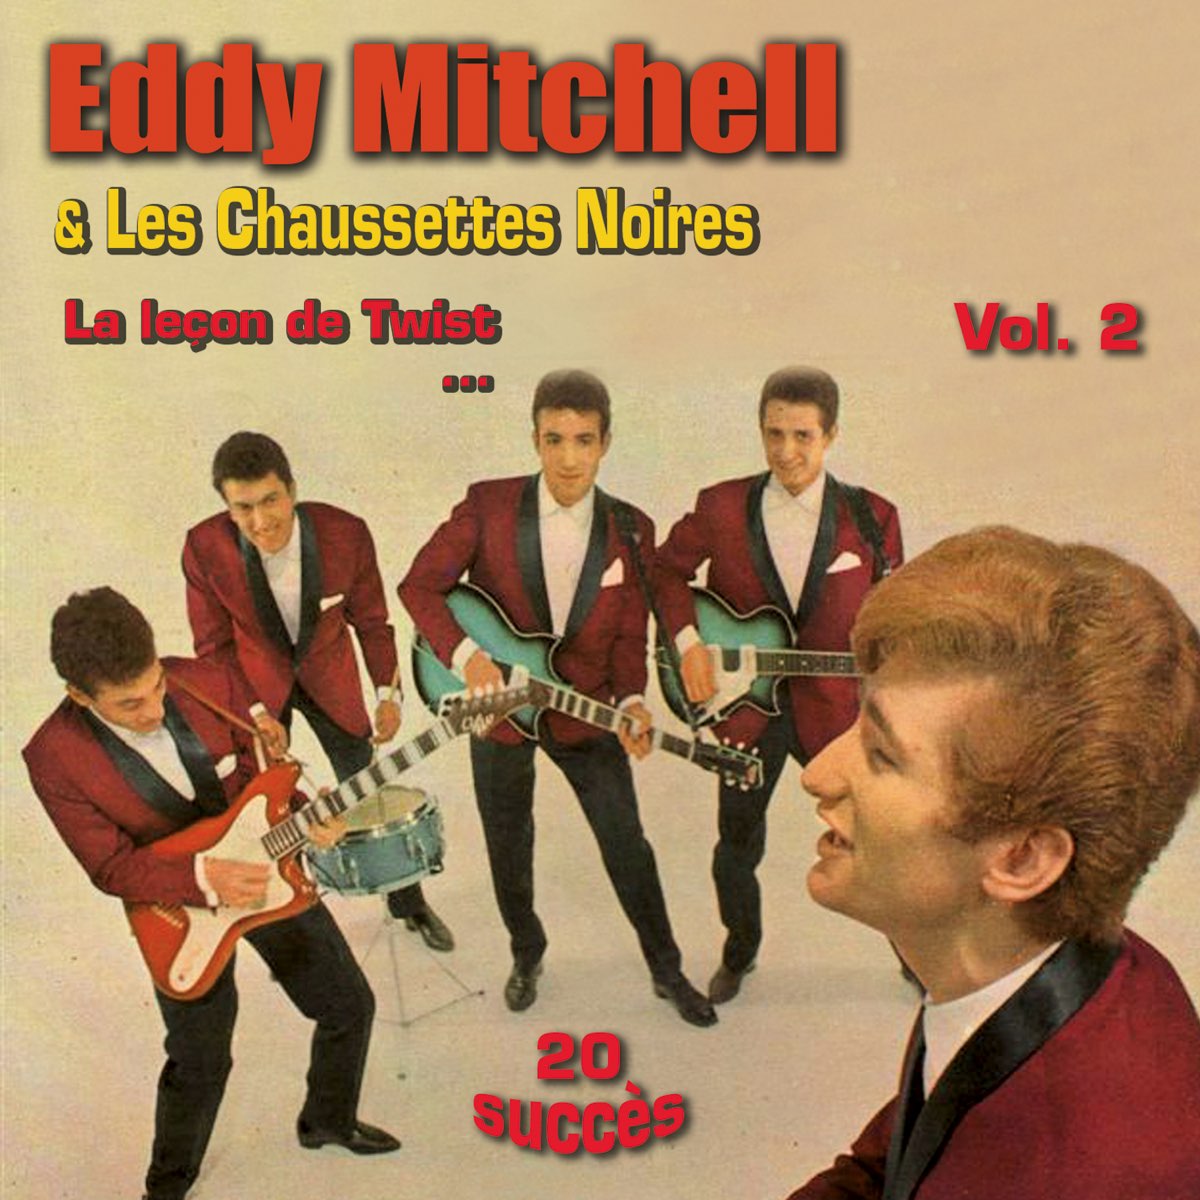 La leçon de twist - Eddy Mitchel & Les chaussettes noires, vol. 2 by Eddy  Mitchell & Les Chaussettes Noires on Apple Music